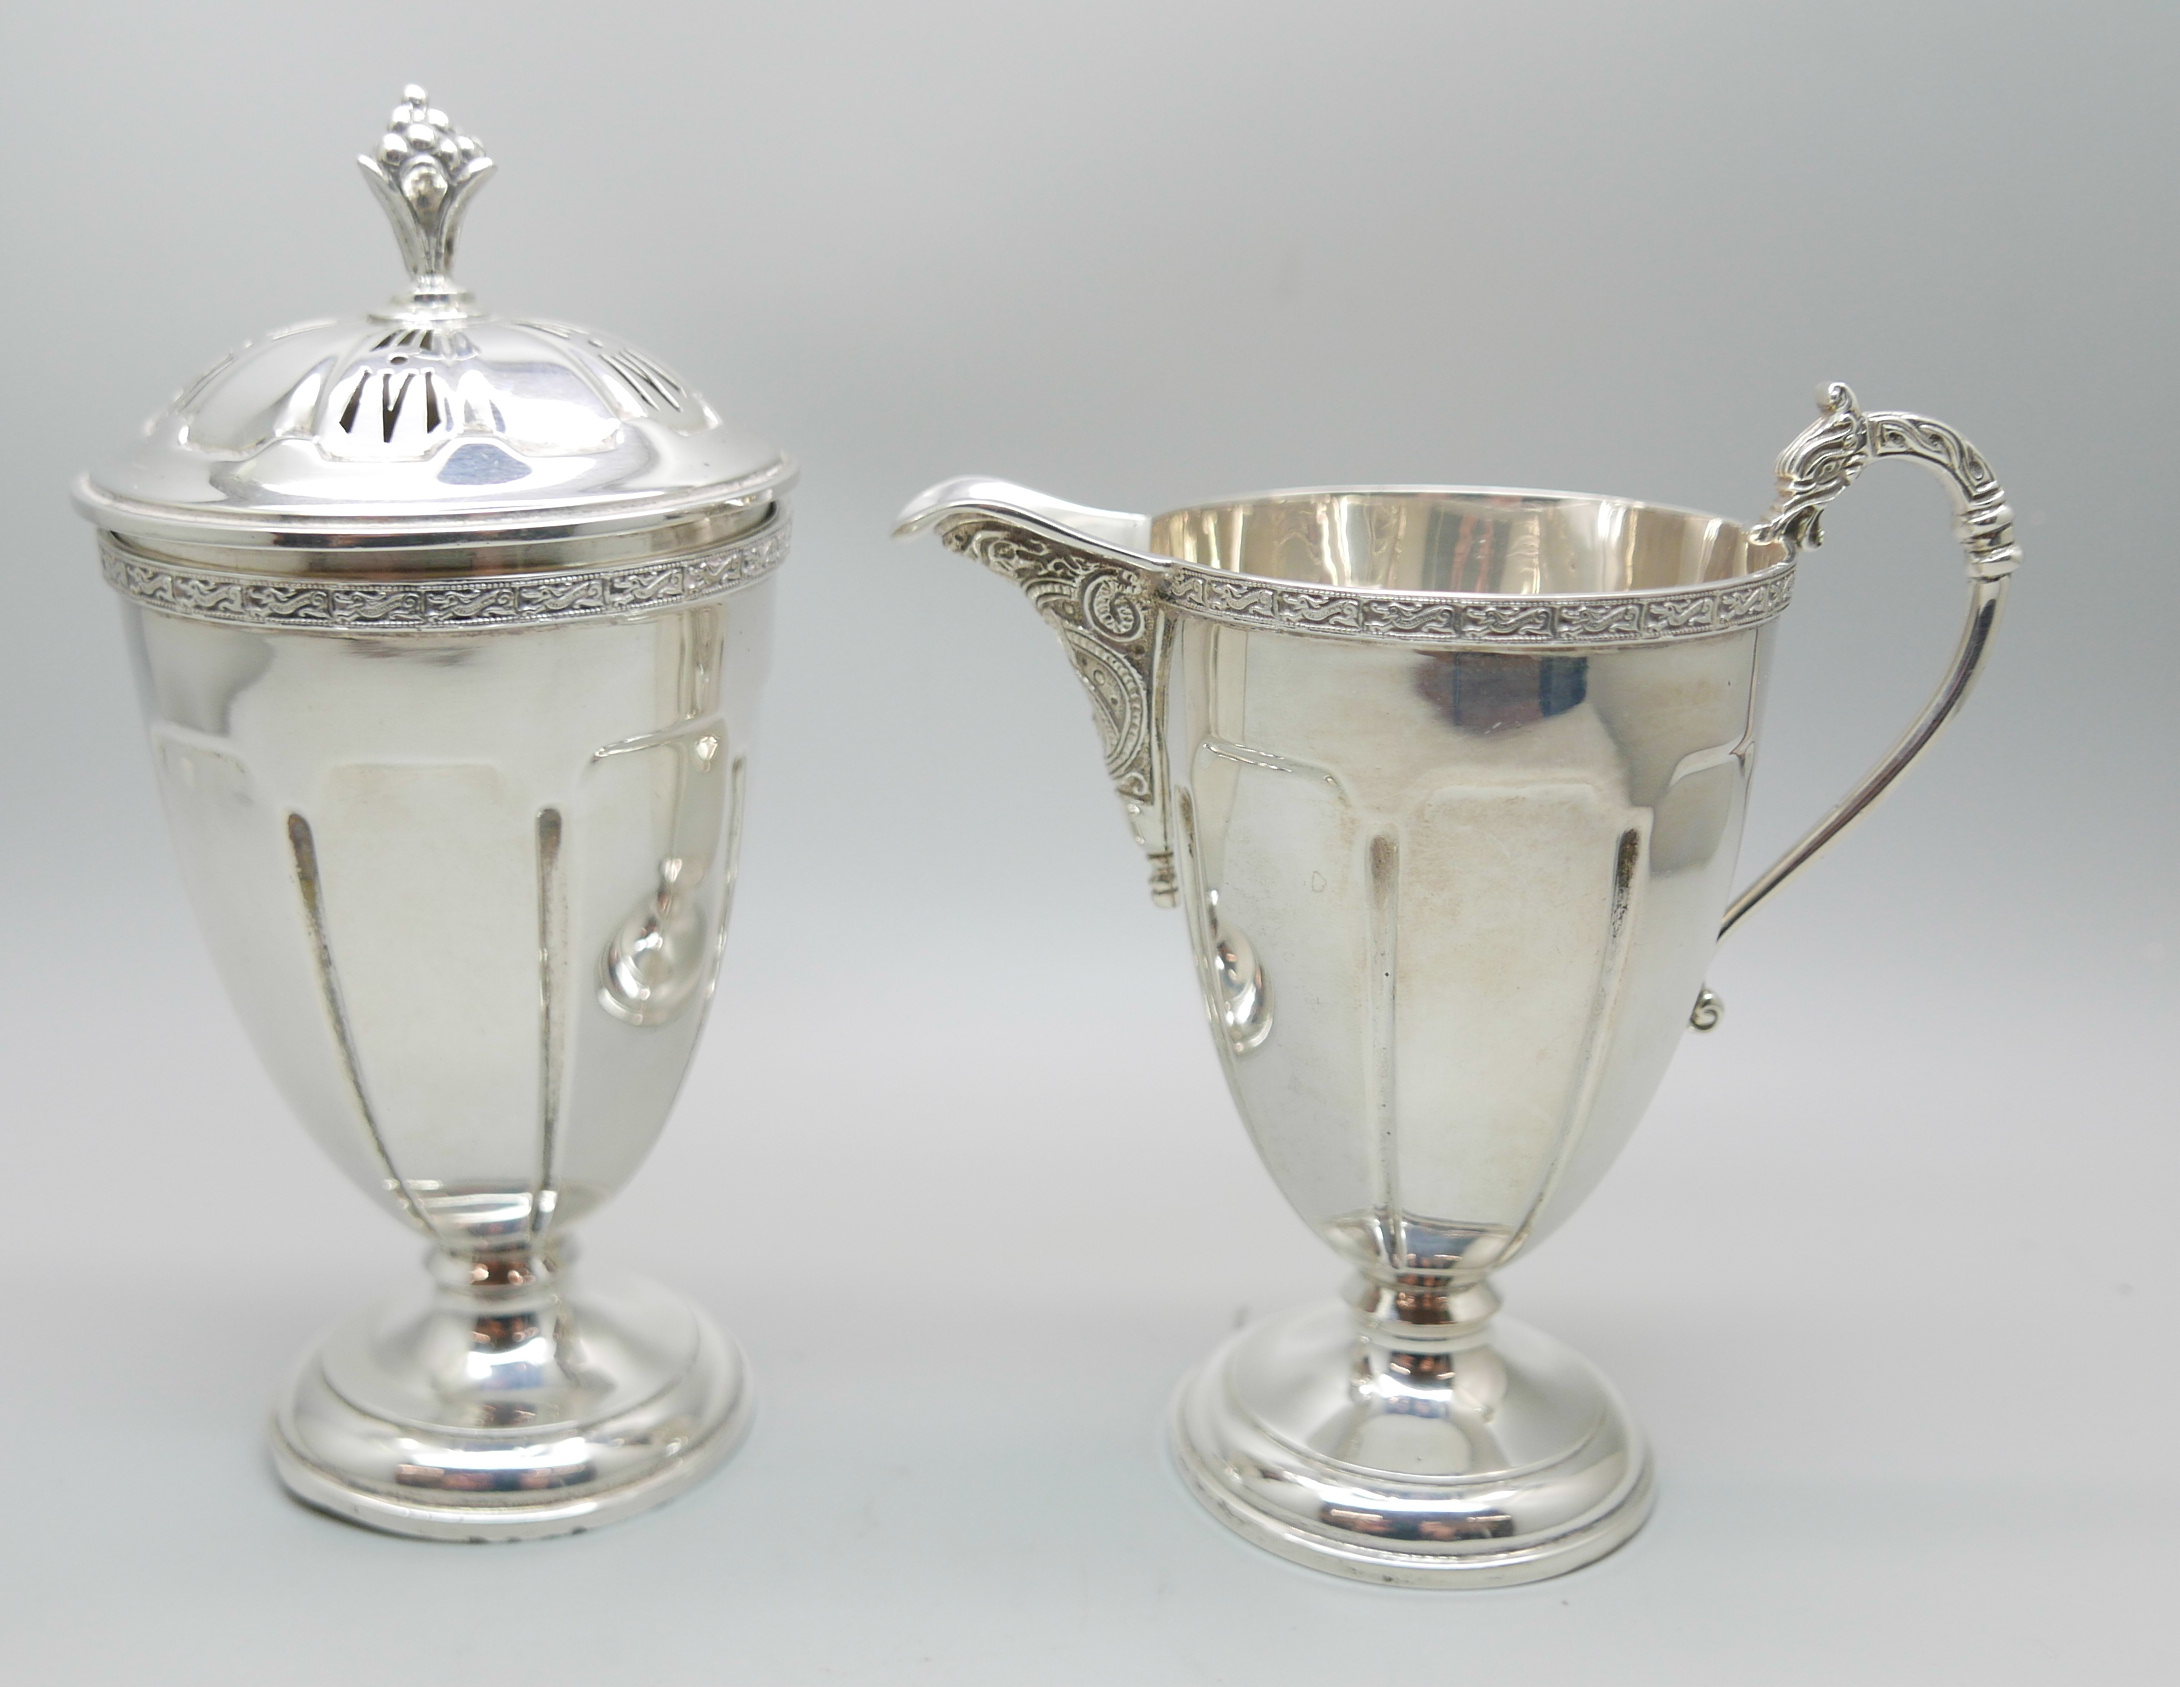 A silver cream jug and a matching sugar shaker by Adie Bros., Birmingham 1935, 207g, (both bases a/